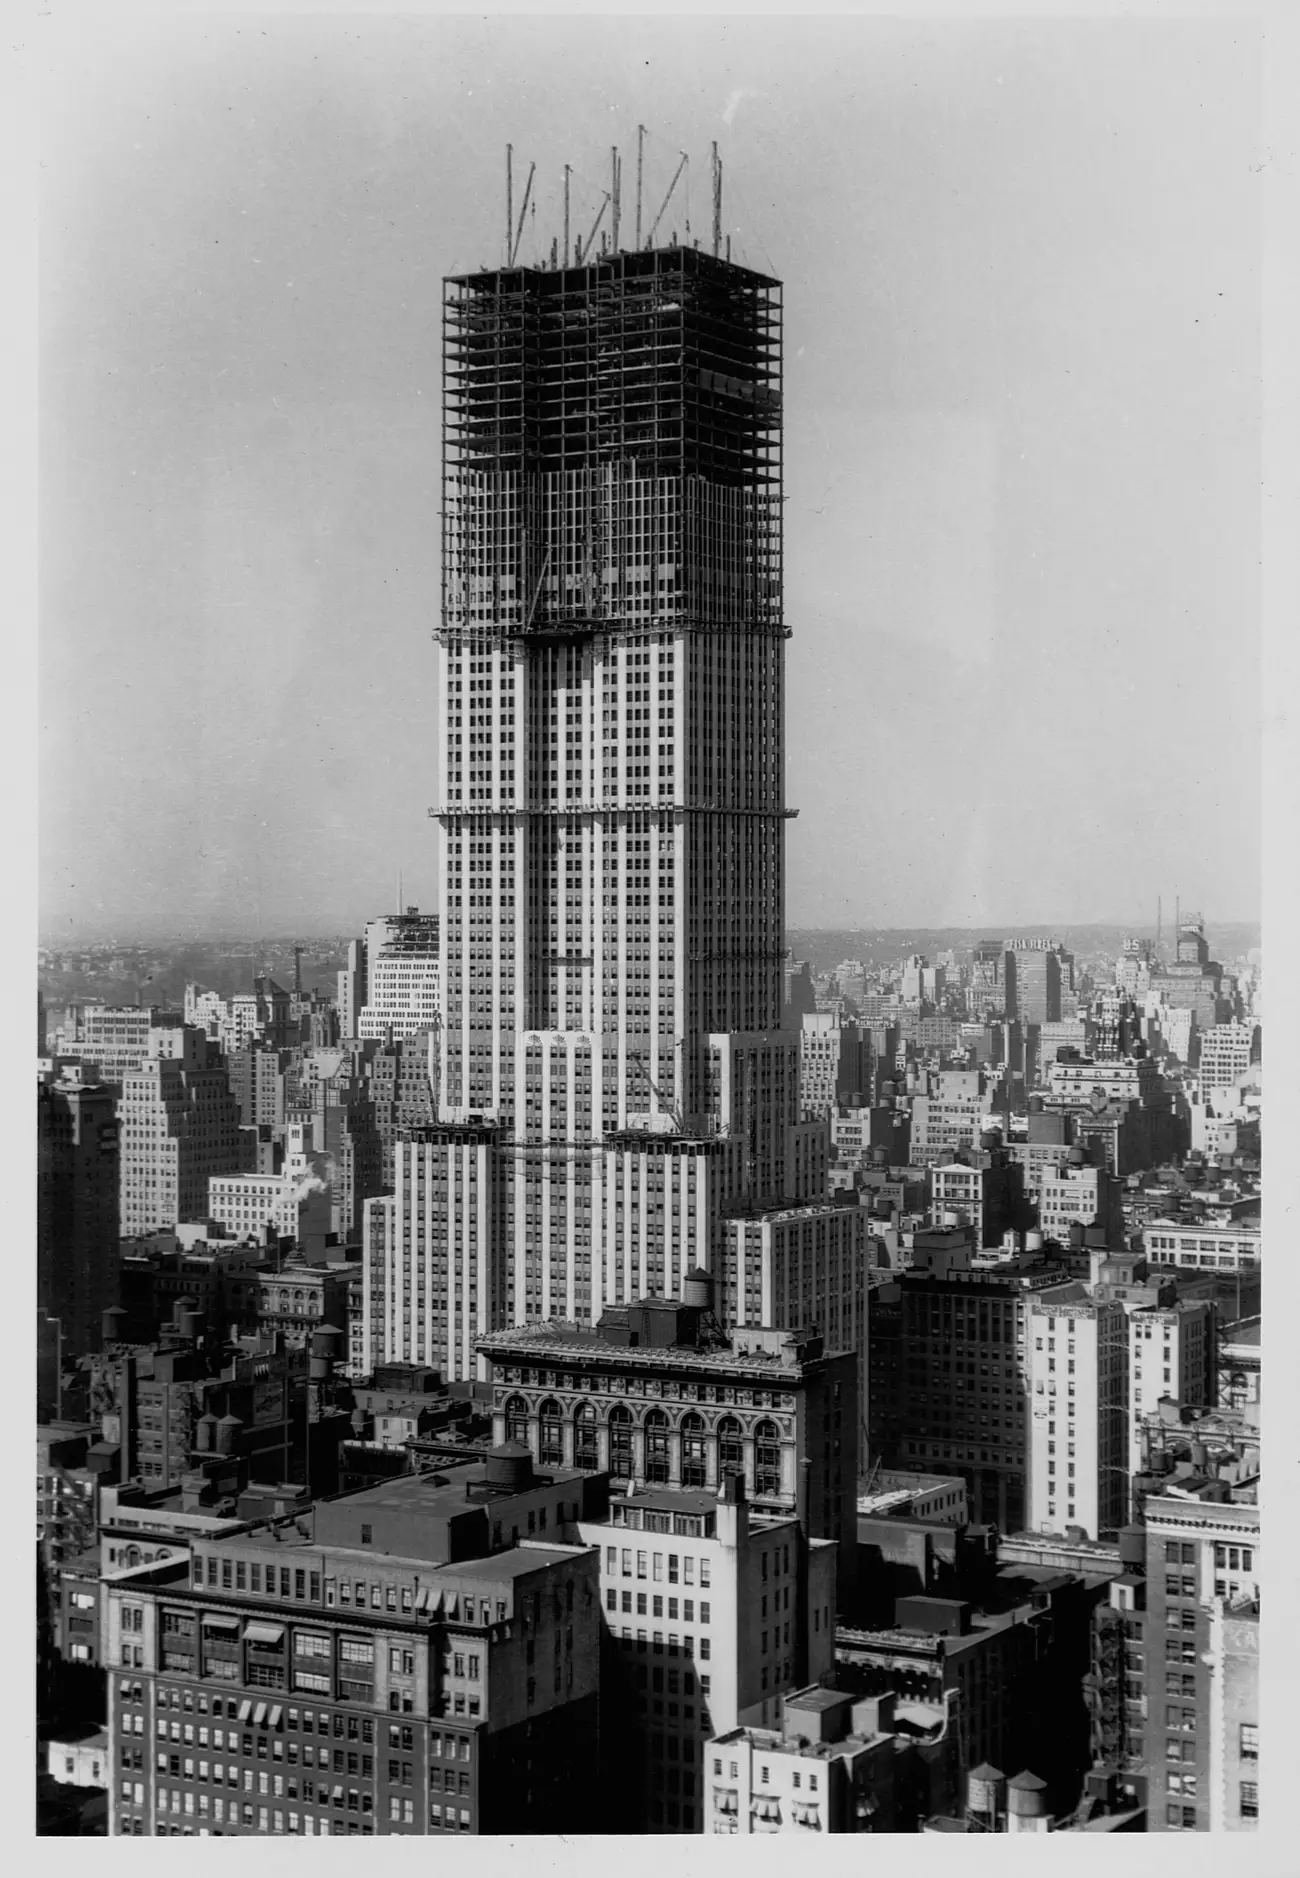 Famous Landmarks Under Construction Quiz Empire State Building under construction